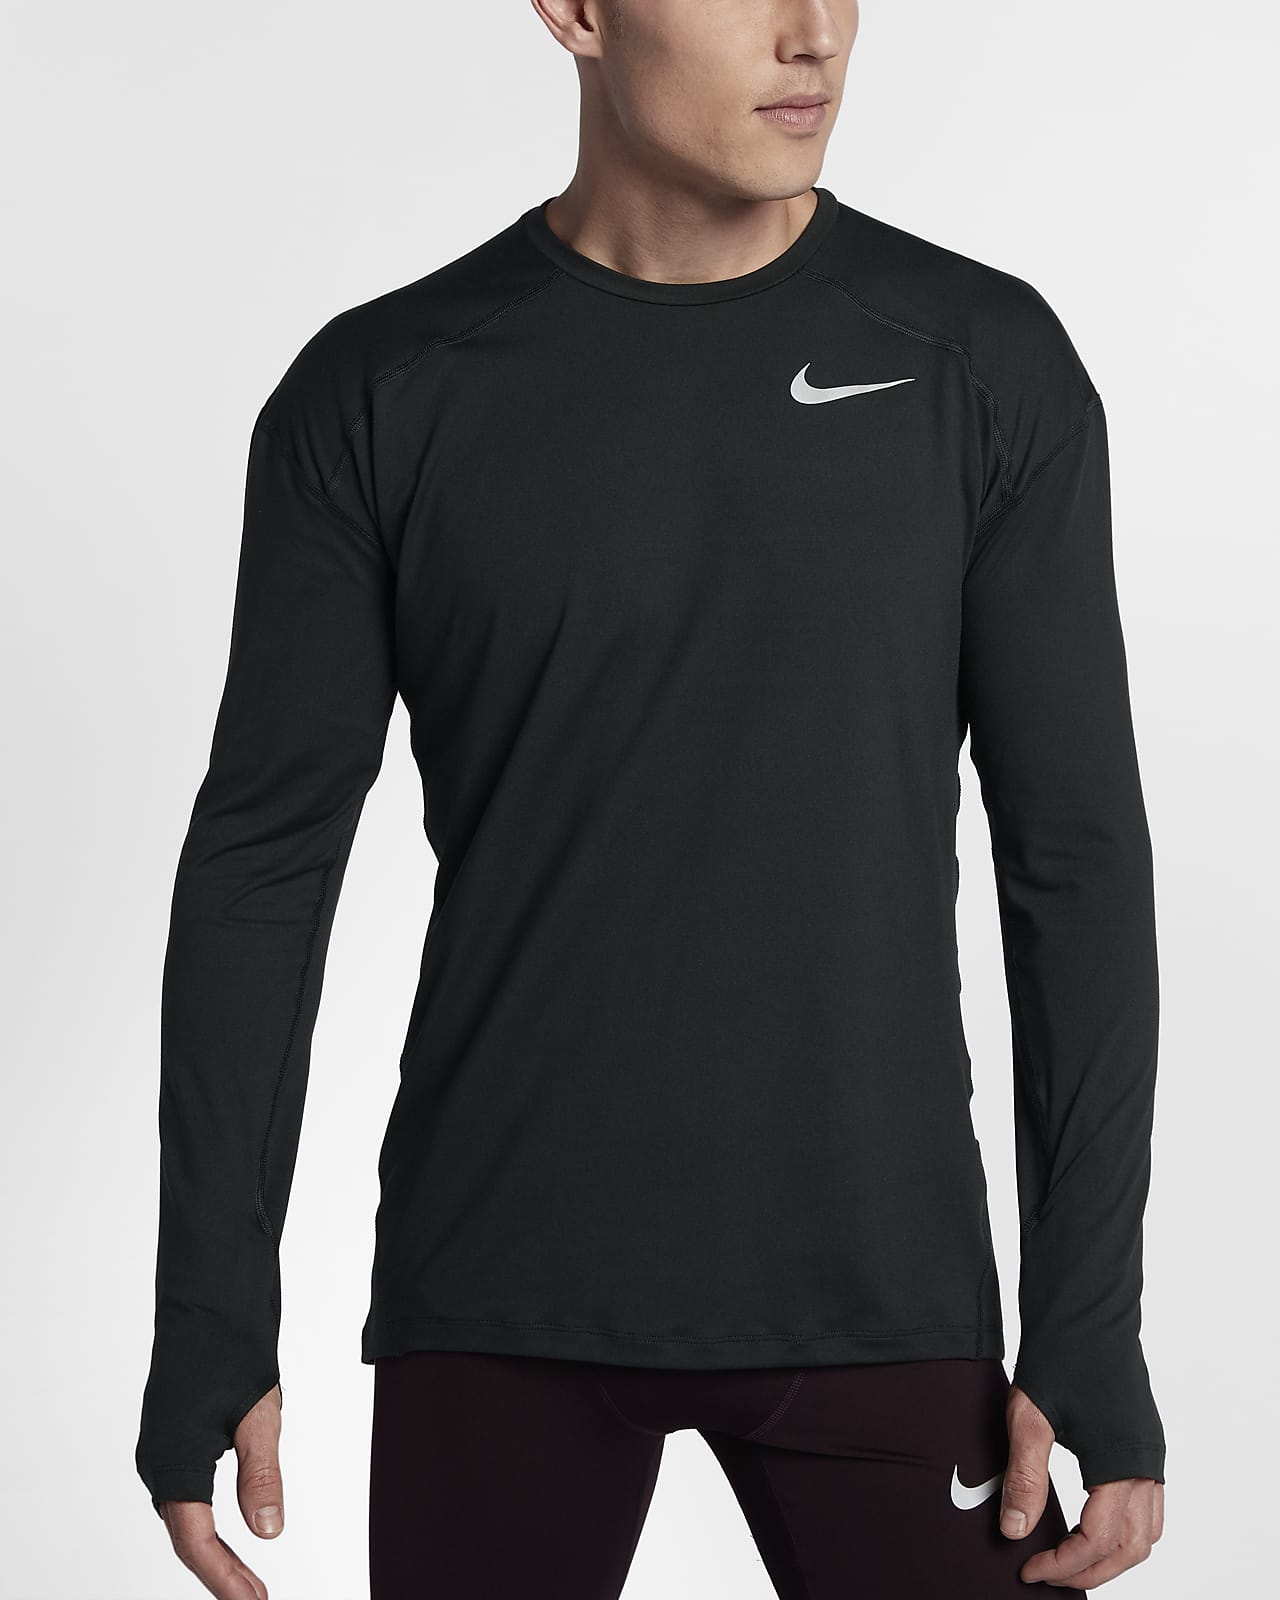 Nike Dri-FIT Element Men's Long-Sleeve 